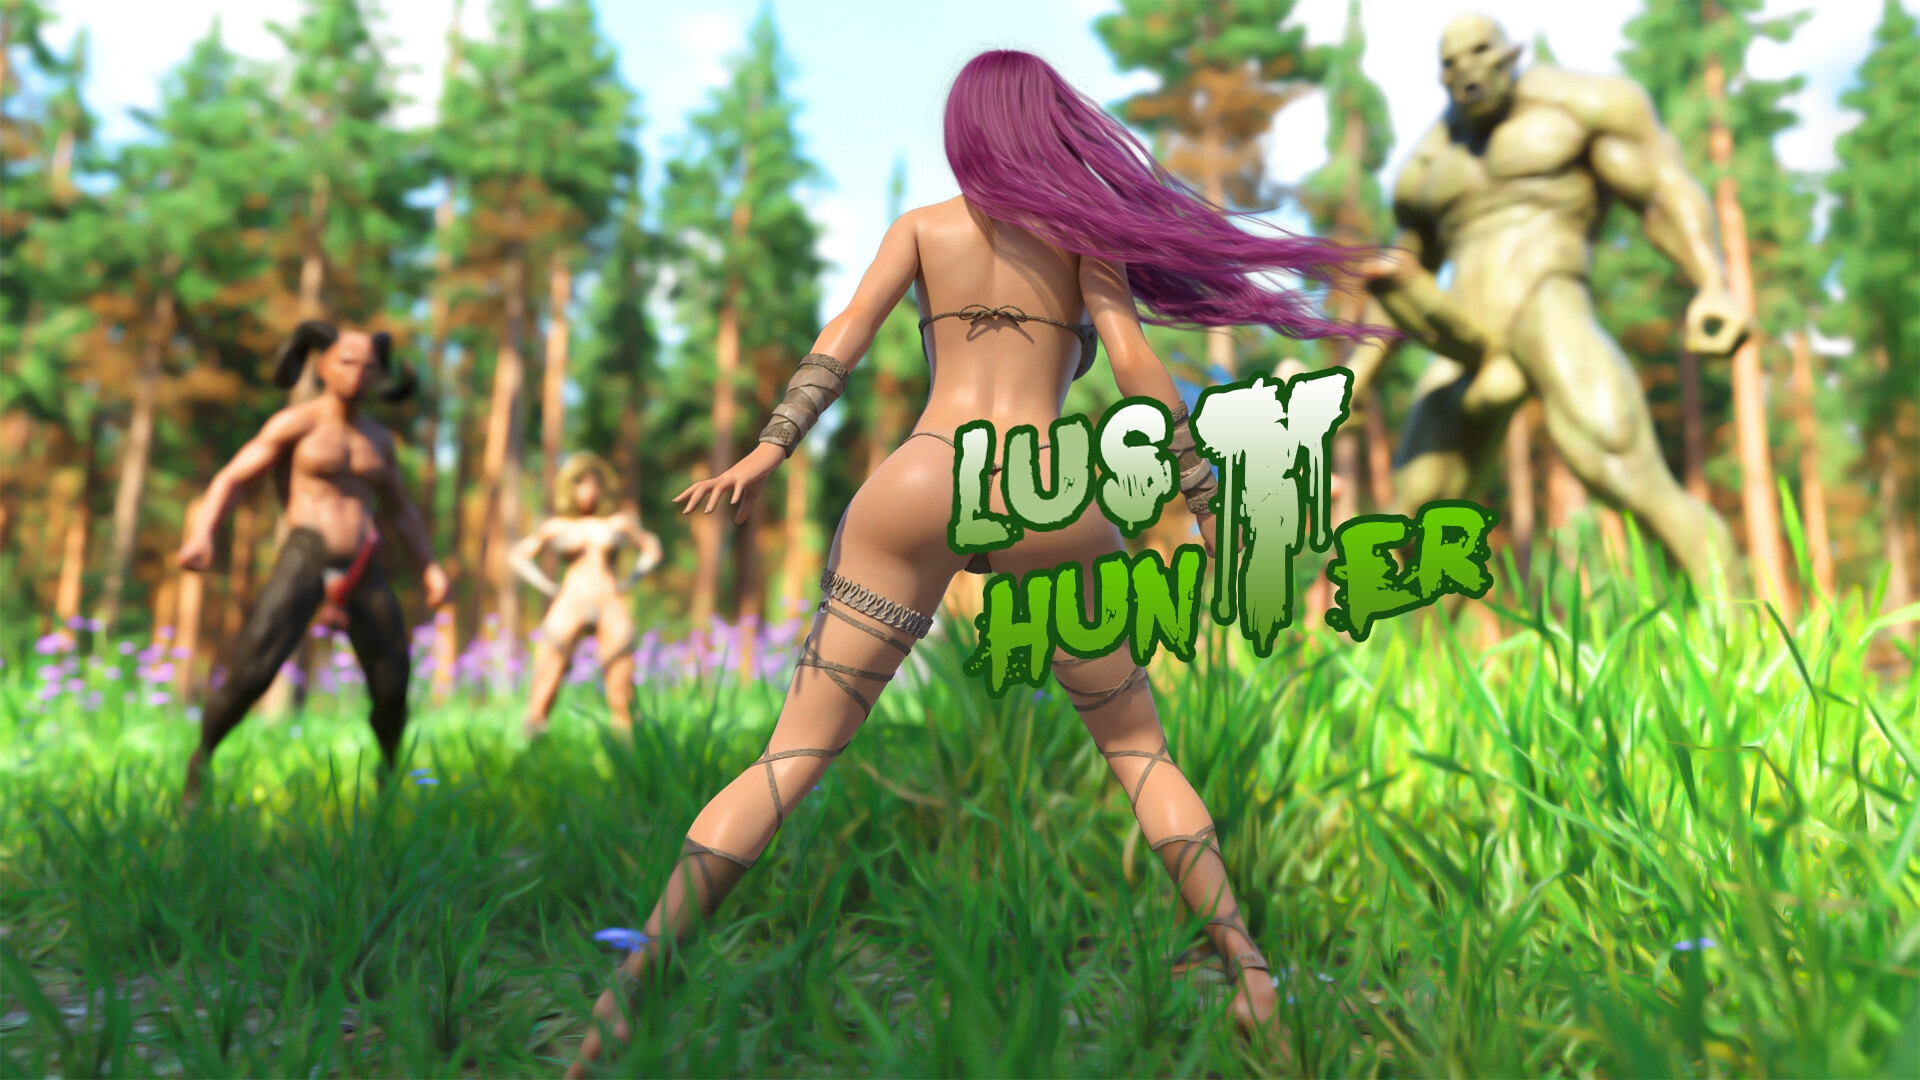 Lust Hunter Main Image